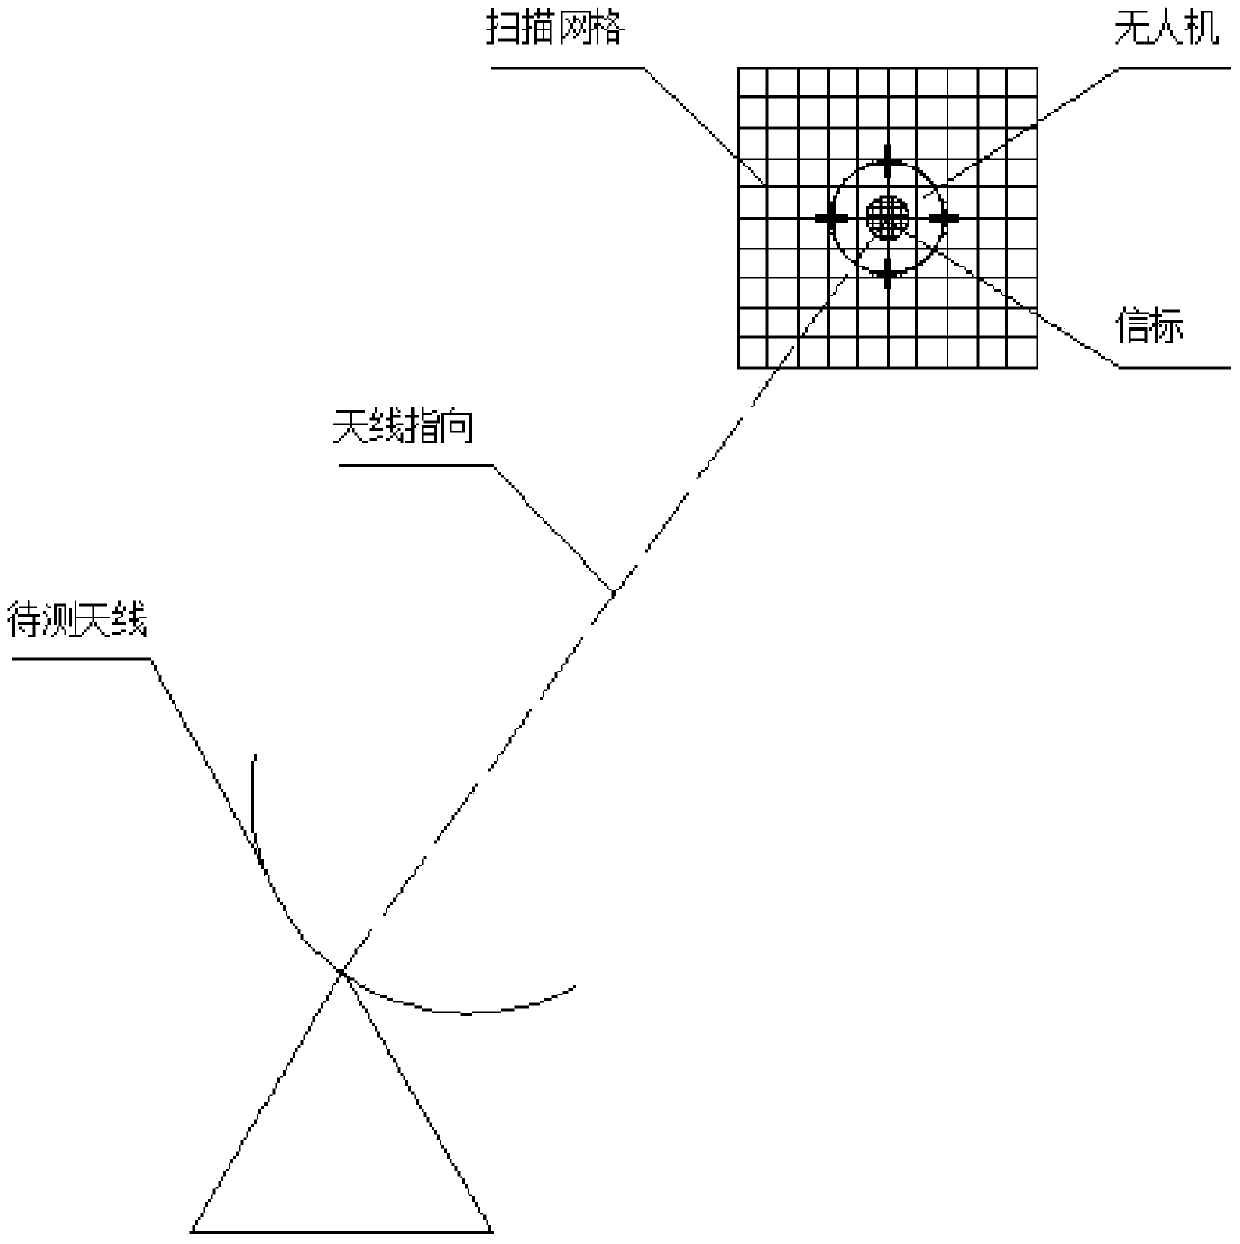 Antenna near-field measurement method based on UAV